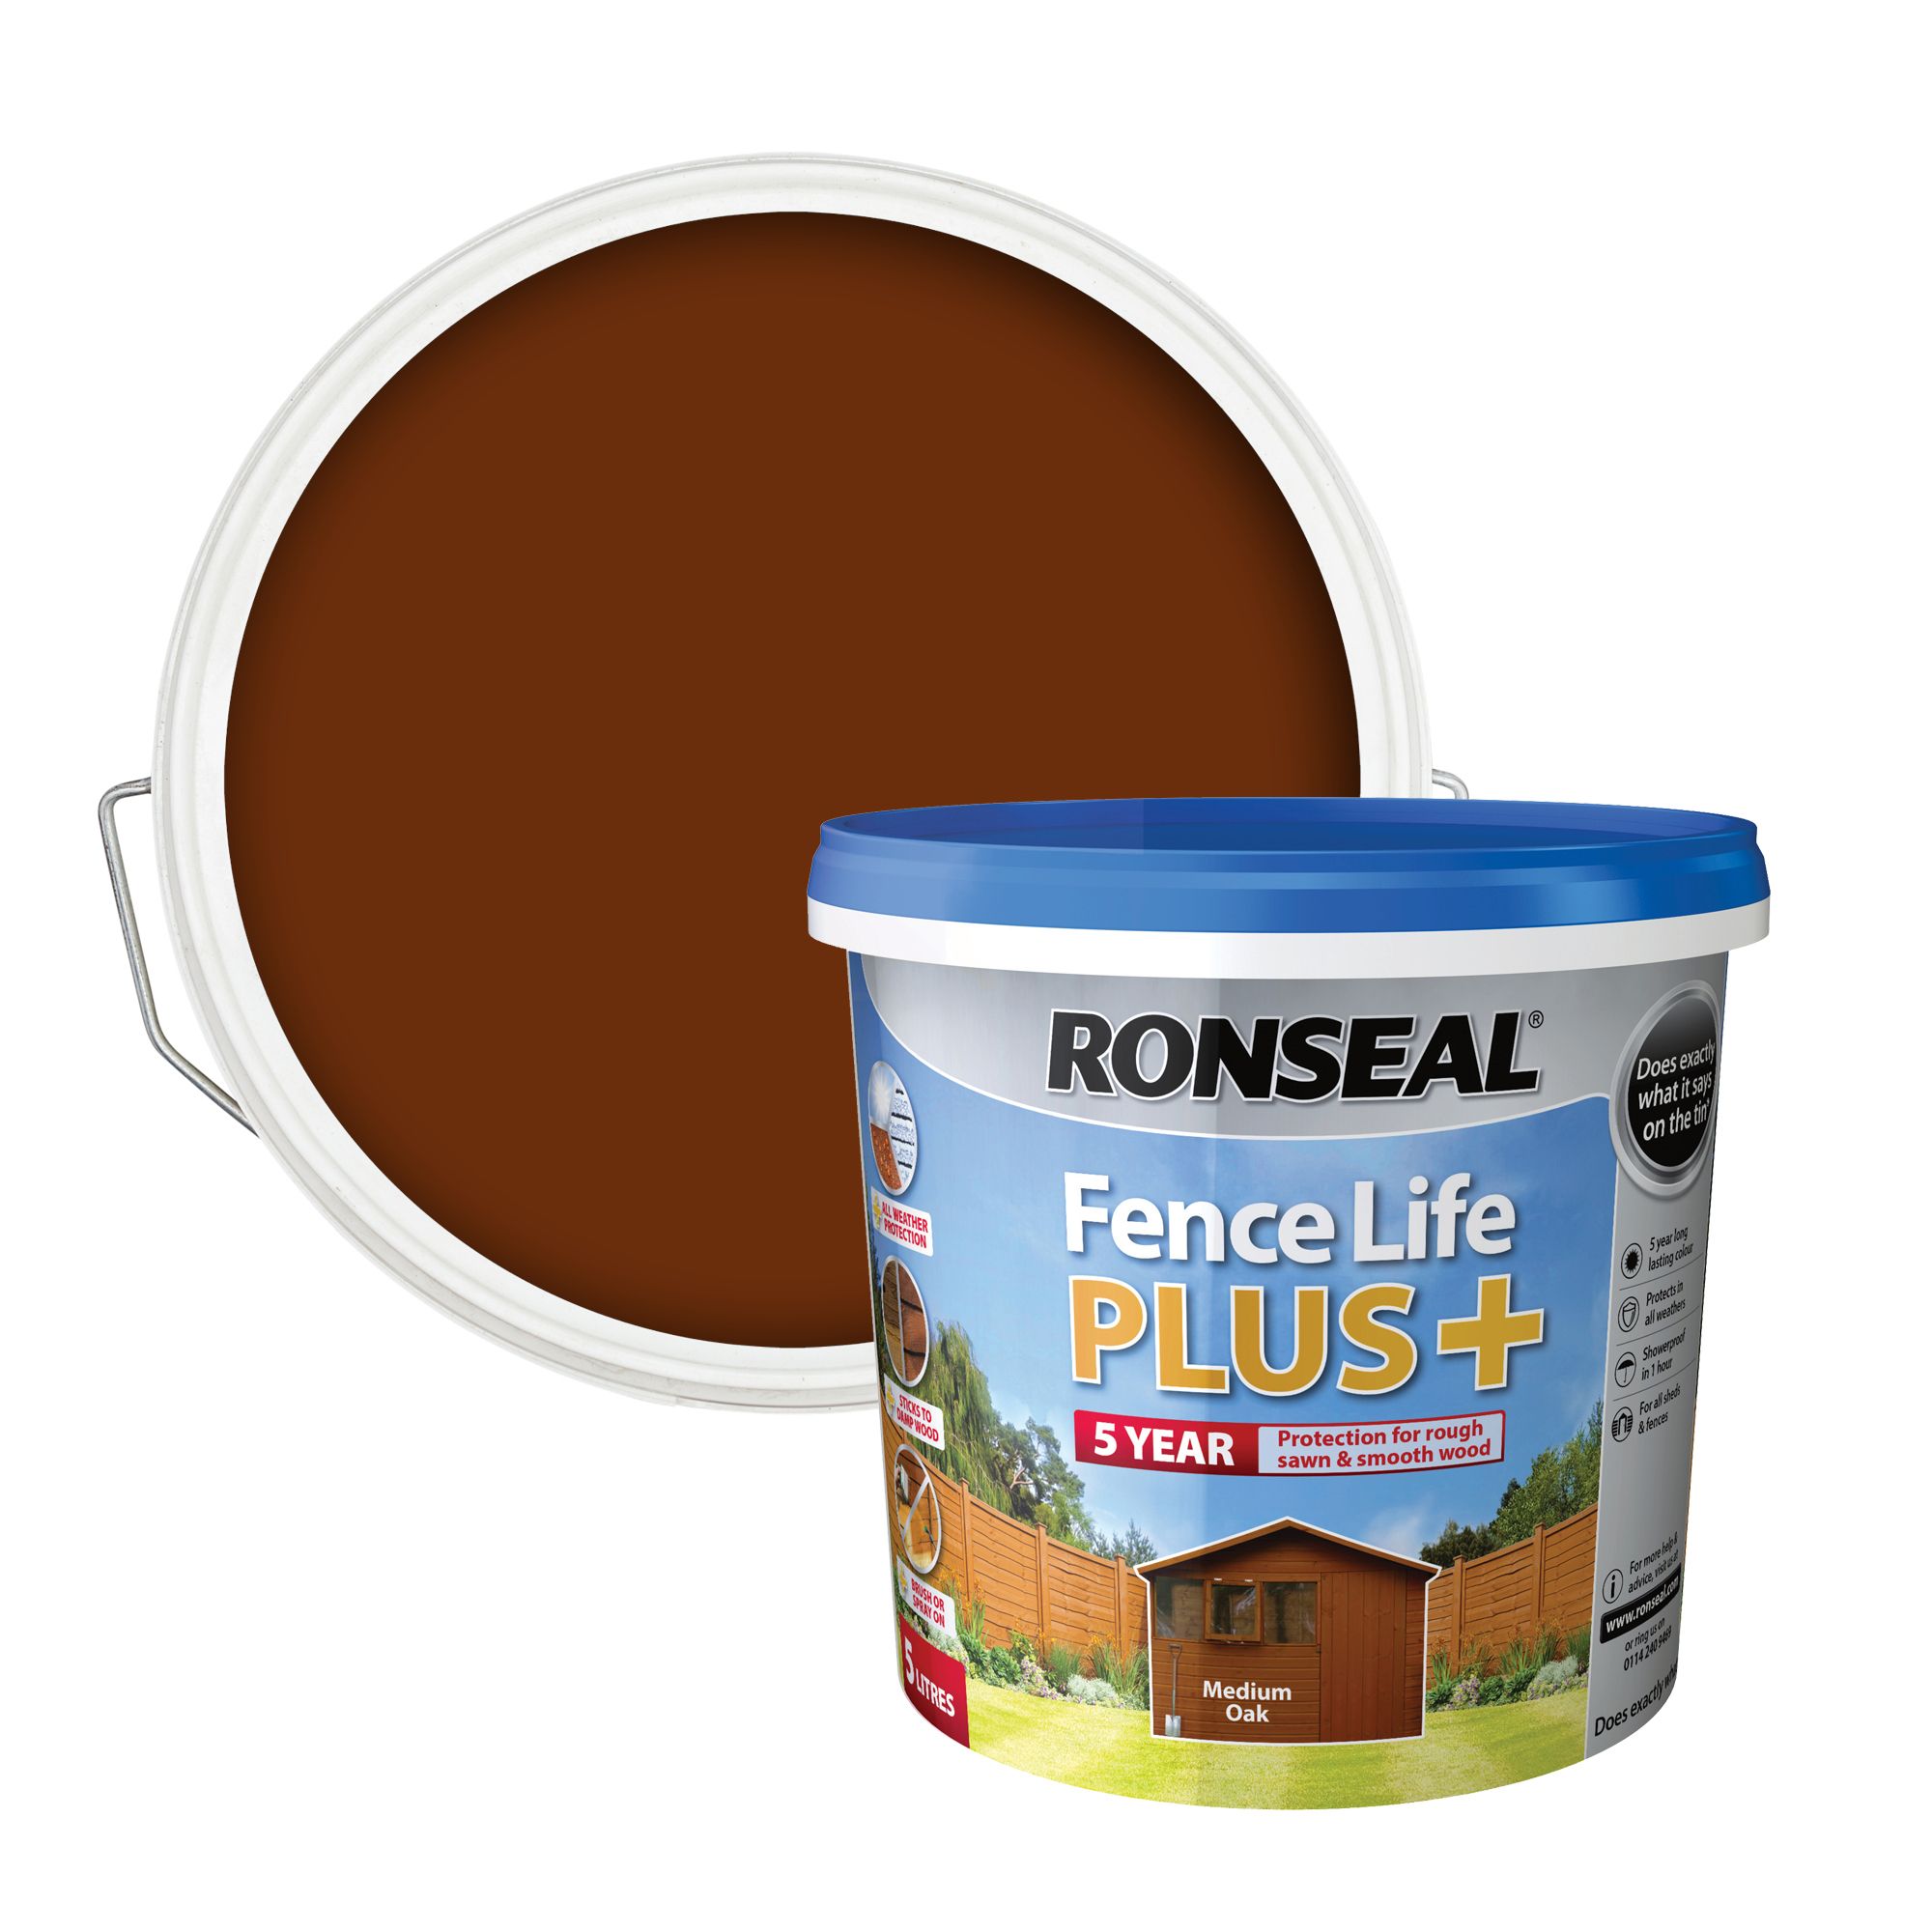 Ronseal Fence Life Plus Medium oak Matt Exterior Wood paint, 5L Tub